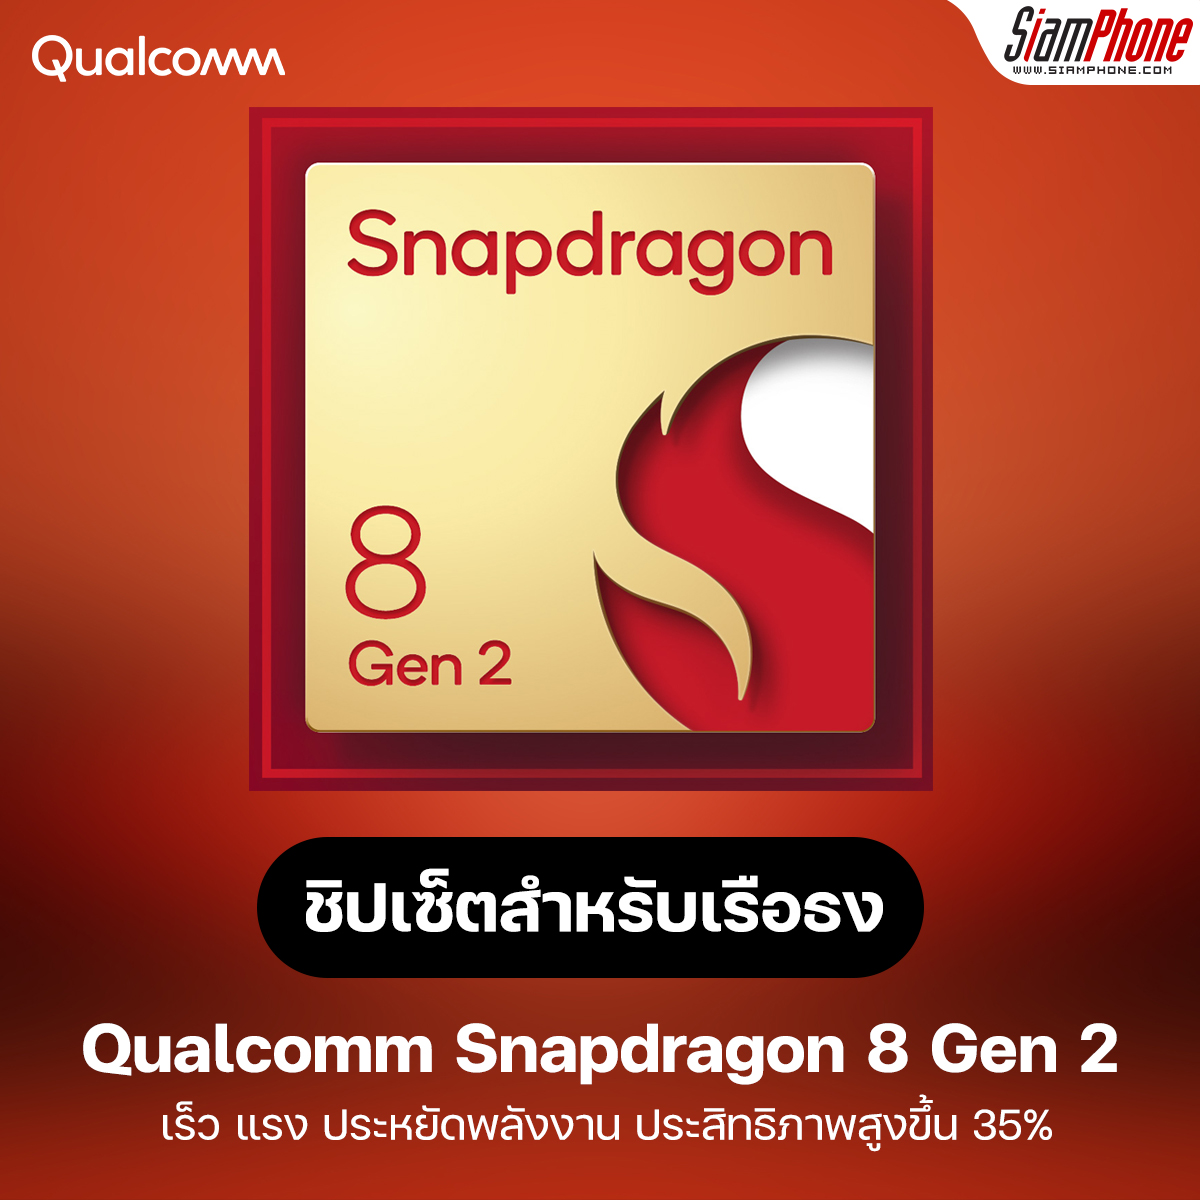 Qualcomm Snapdragon 8 Gen 2, fast, powerful, energy-saving